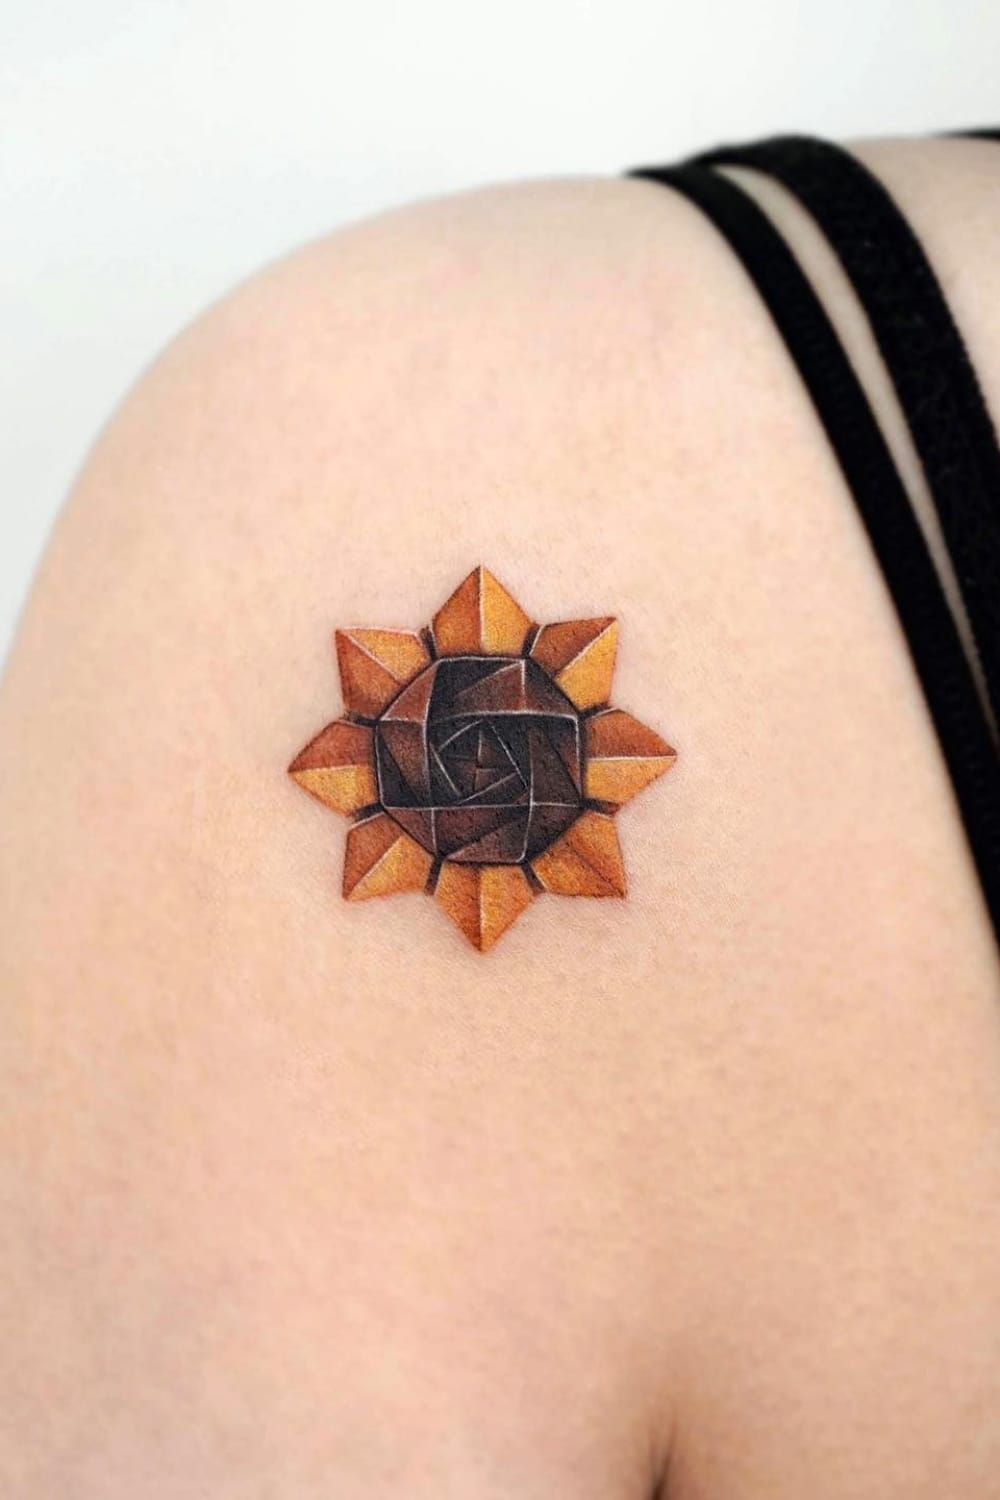 Small sunflower origami tattoo